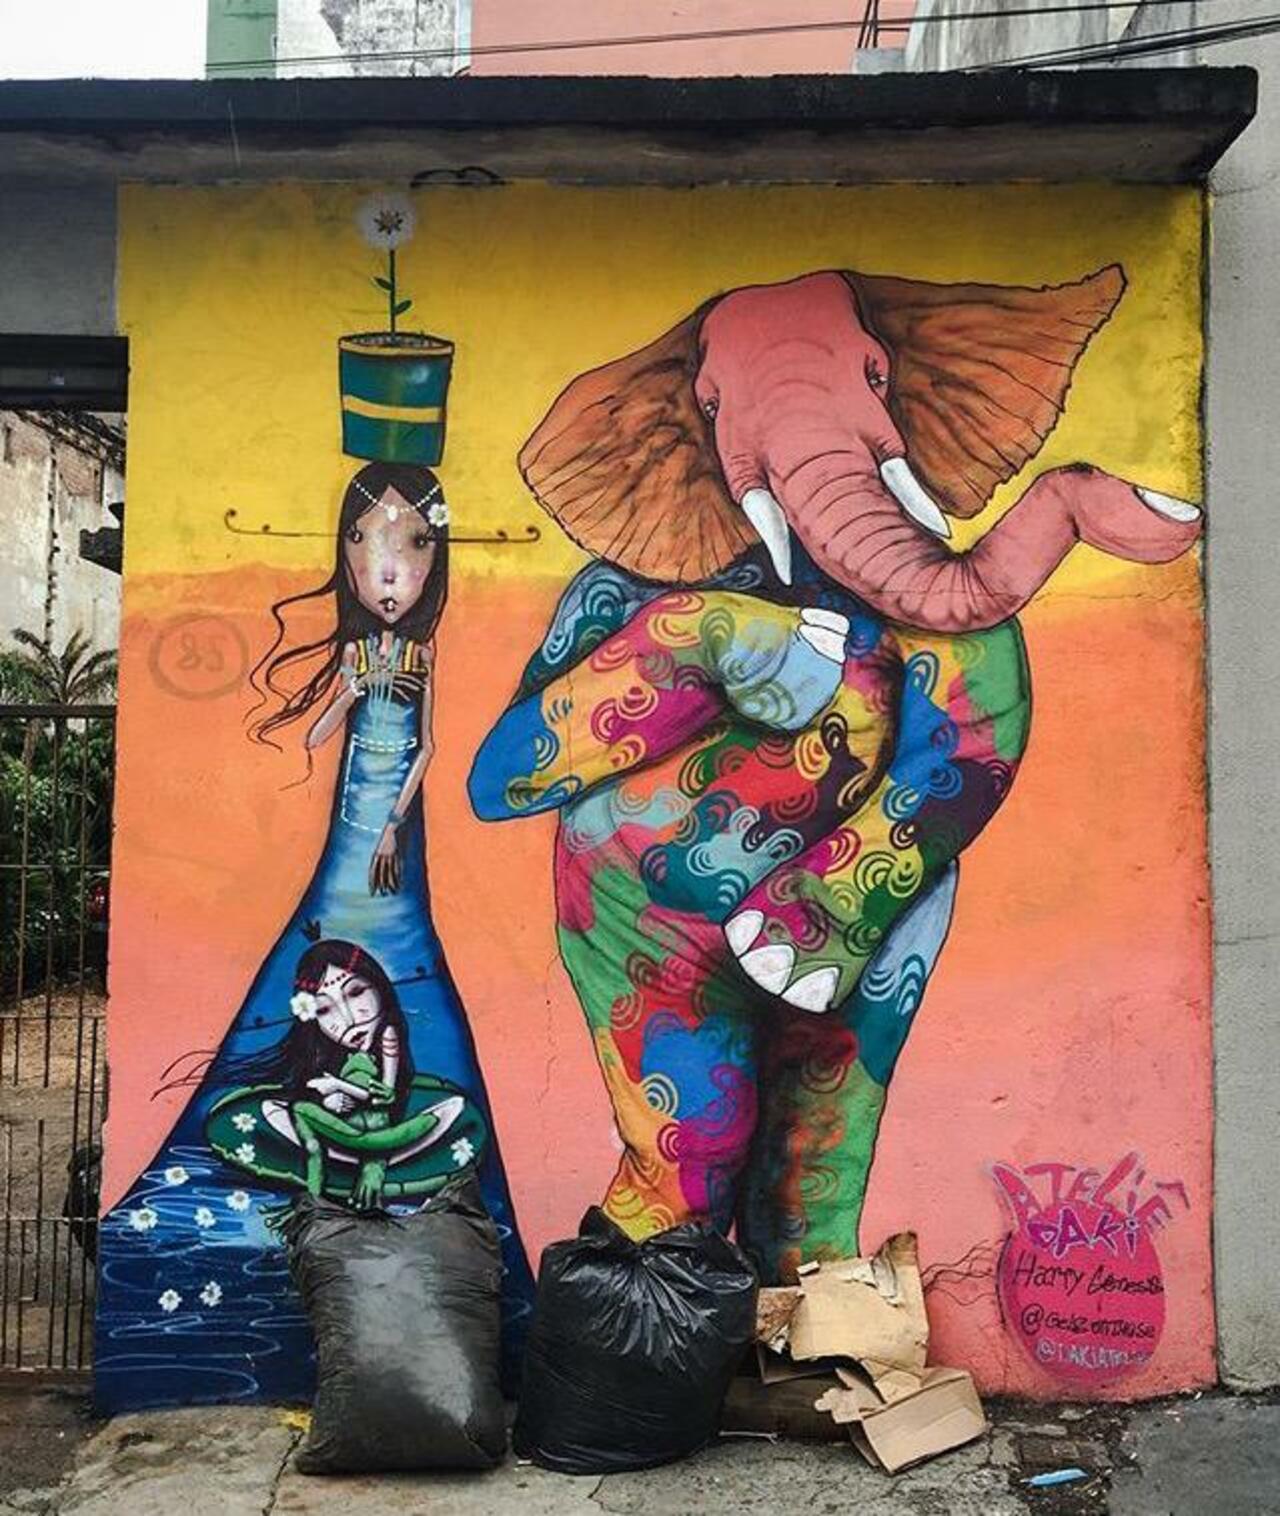 Street Art by Harry Geneis & Gelson in São Paulo #art #mural #graffiti #streetart http://t.co/SlLbhuMZfD … … …… … http://twitter.com/GoogleStreetArt/status/648016473831645184/photo/1/large?utm_source=fb&utm_medium=fb&utm_campaign=charlesjackso14&utm_content=648025113712062464